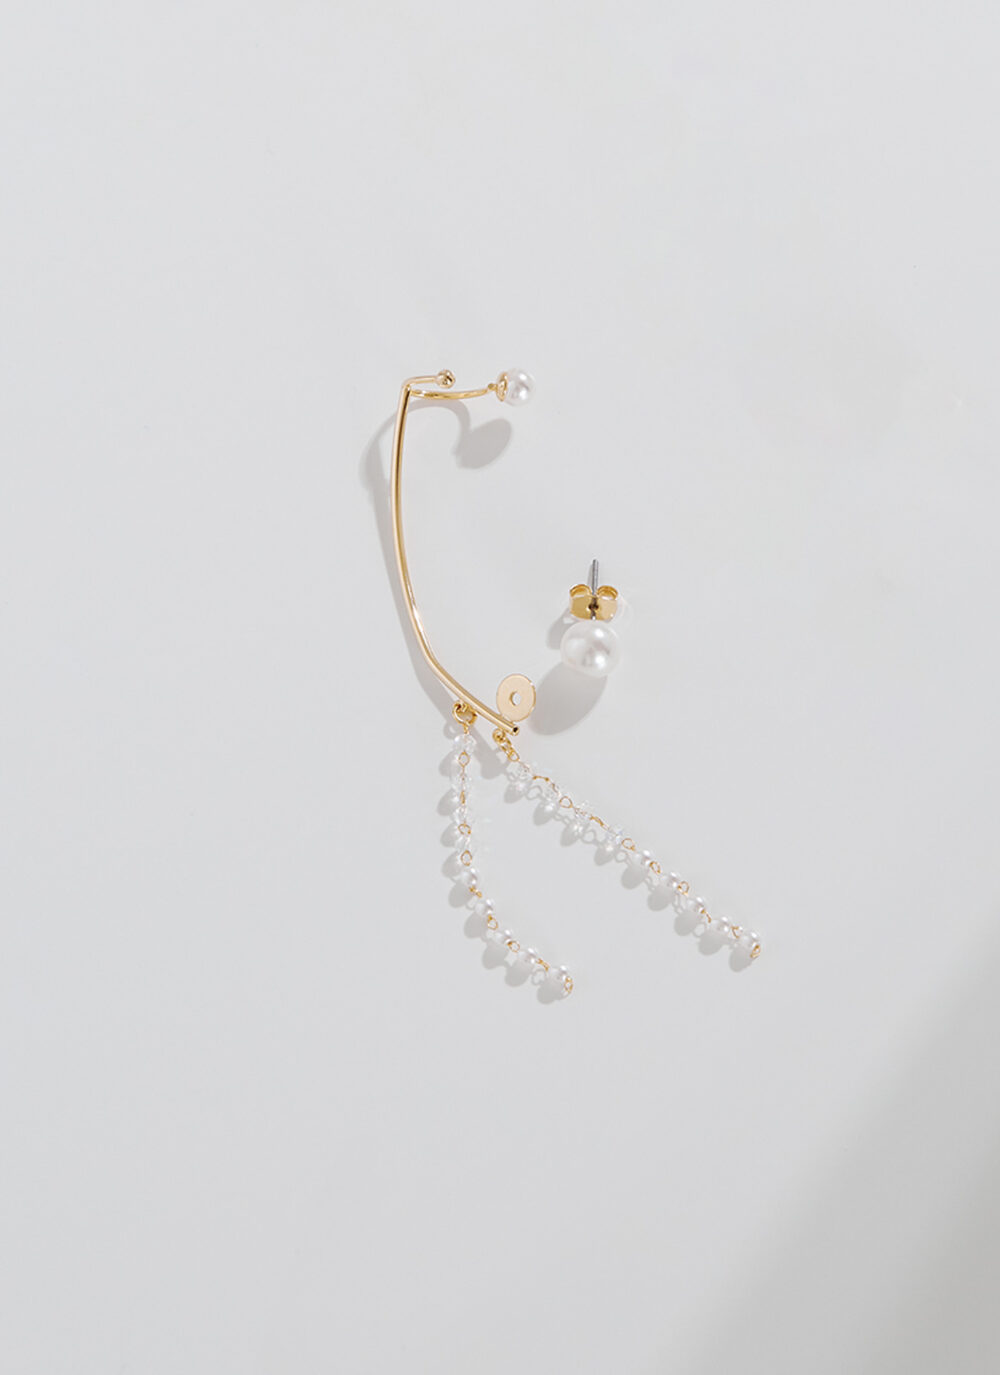 Eco安珂,韓國飾品,韓國耳環,耳針式耳環,耳骨夾耳針耳環,氣質耳環,單珍珠垂墜耳環